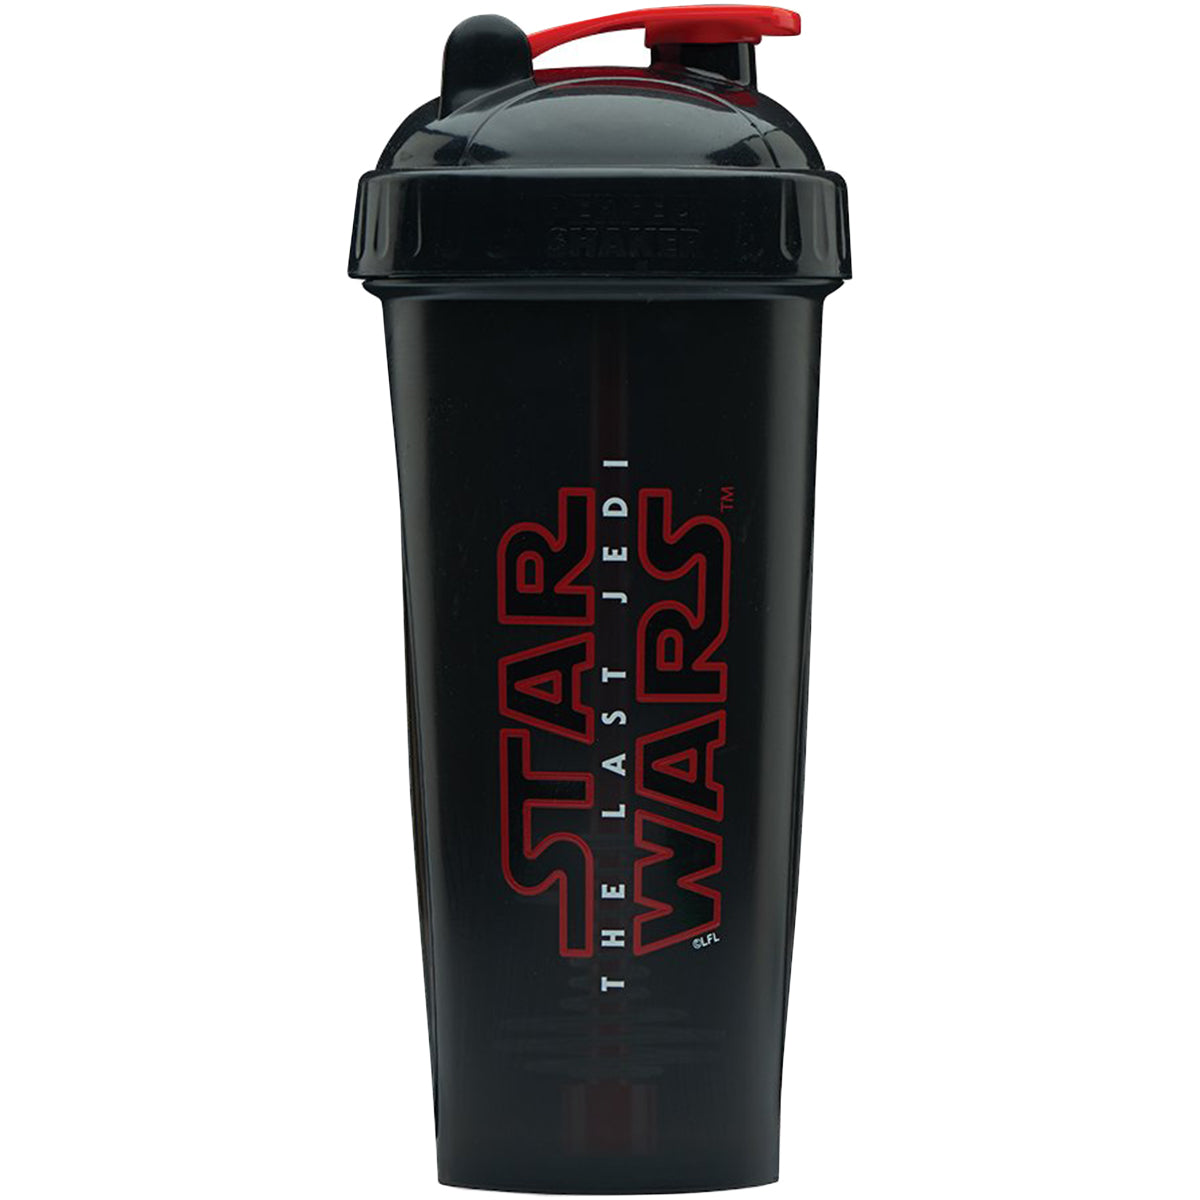 Performa PerfectShaker 28 oz. Star Wars Shaker Cup Bottle, Last Jedi Logo, Black PerfectShaker